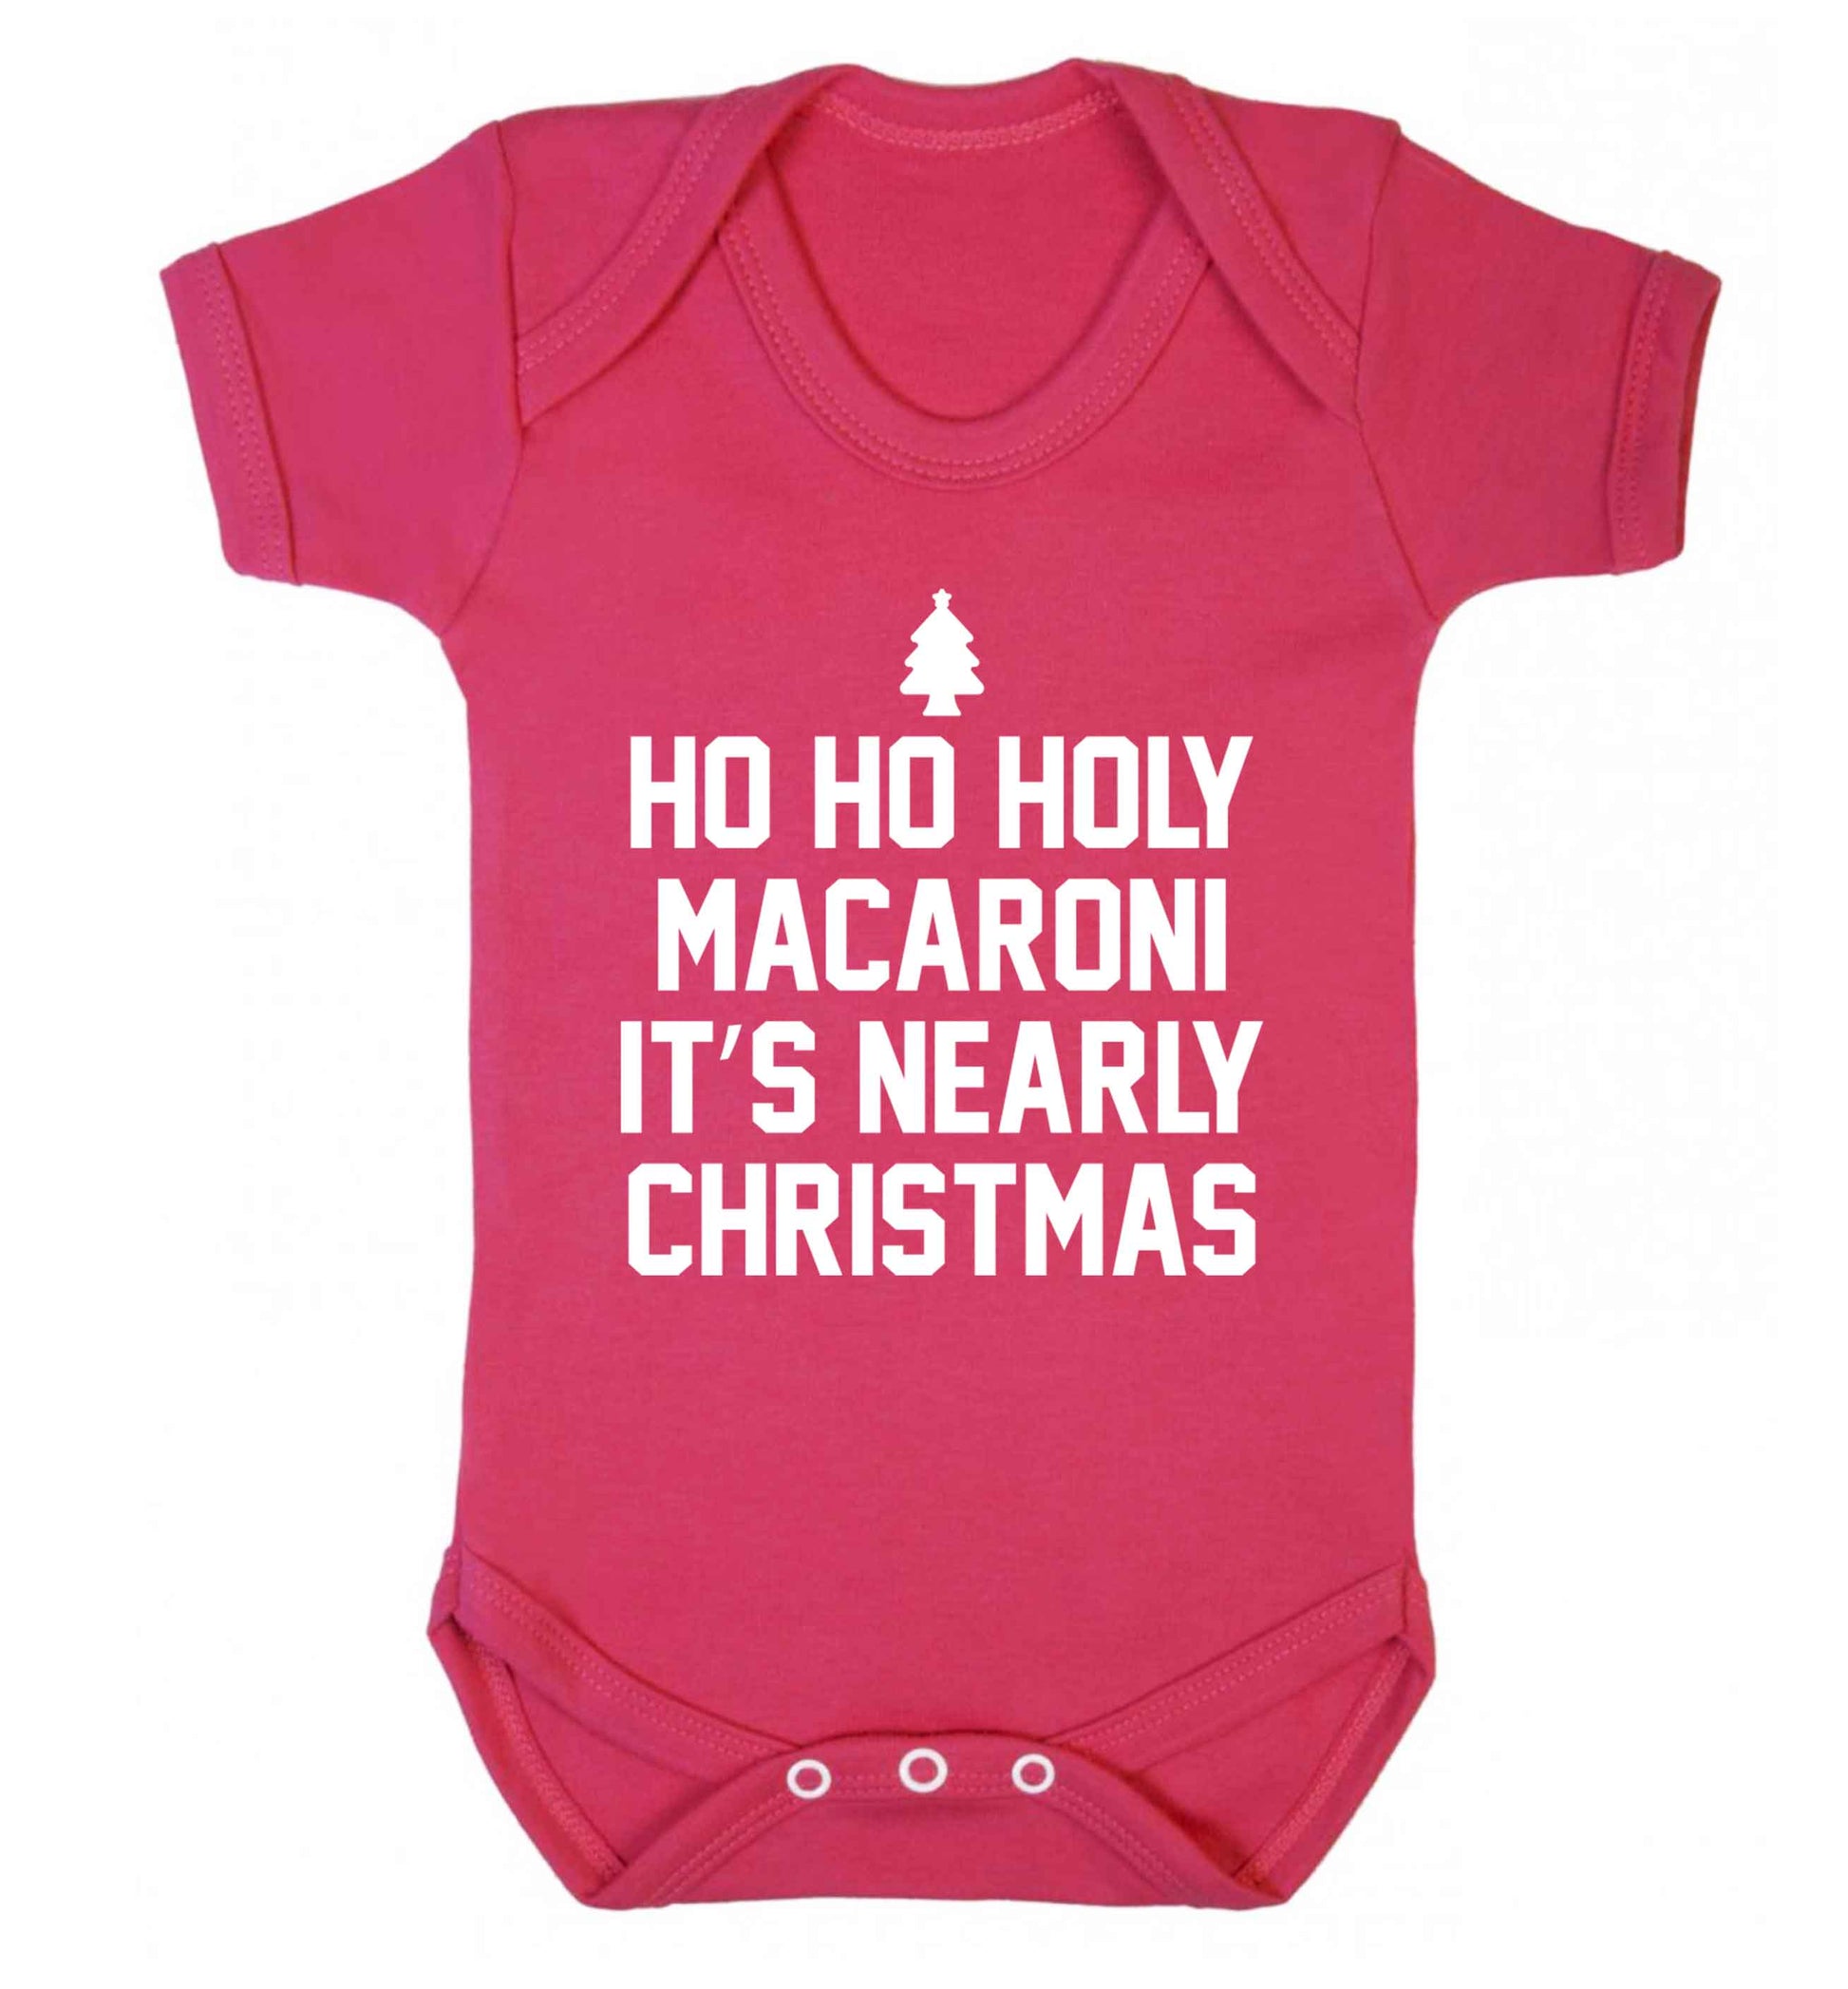 Ho ho holy macaroni it's nearly Christmas Baby Vest dark pink 18-24 months